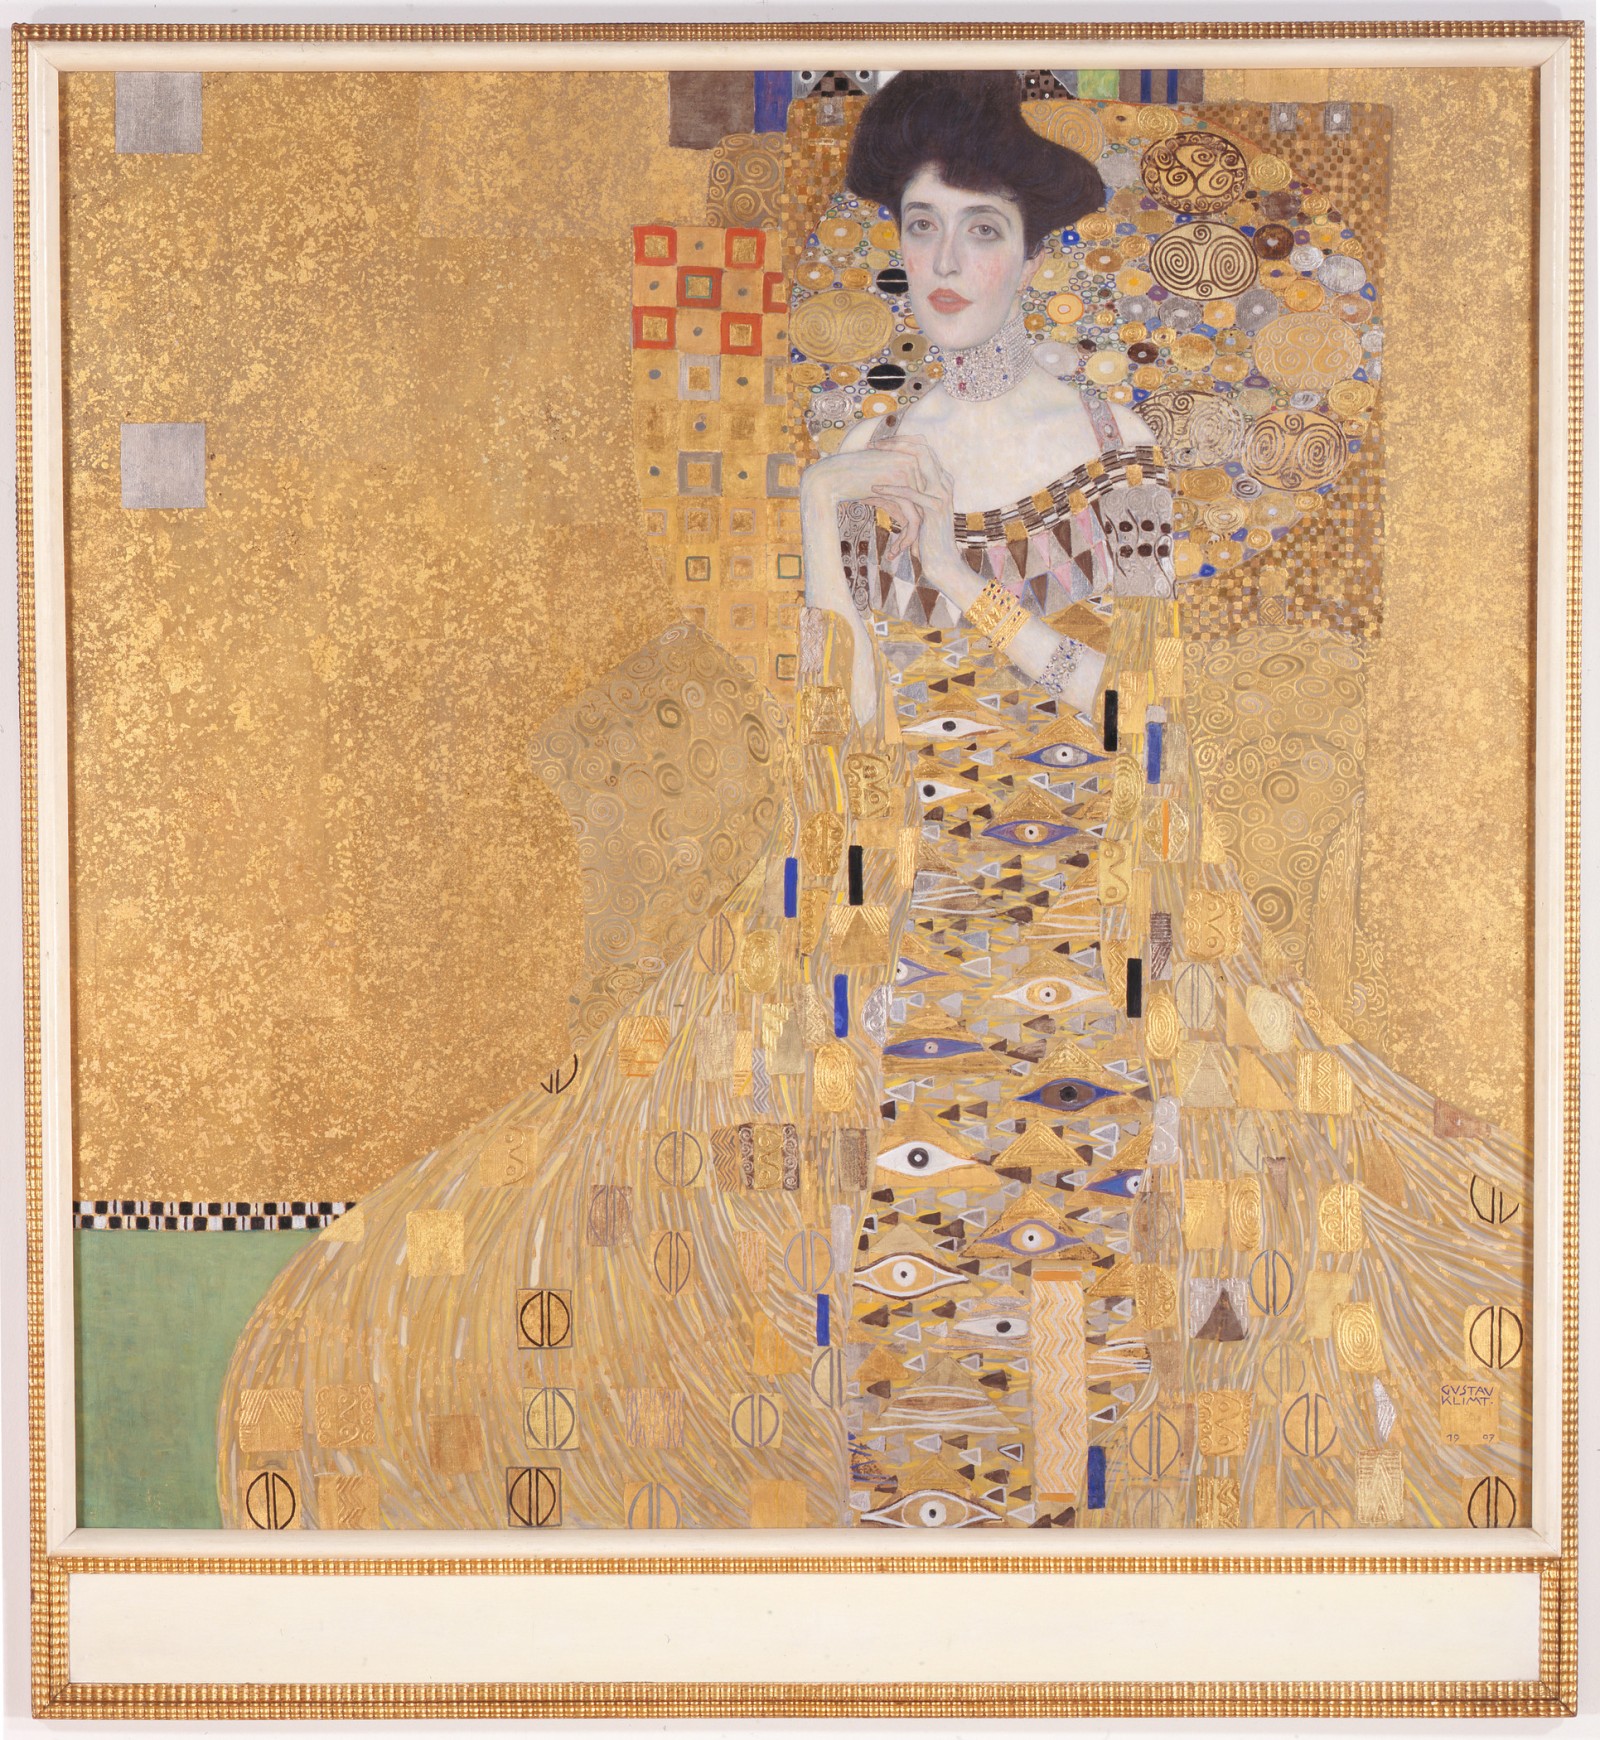 Image: Gustav Klimt (1862-1918), Adele Bloch-Bauer I, 1907